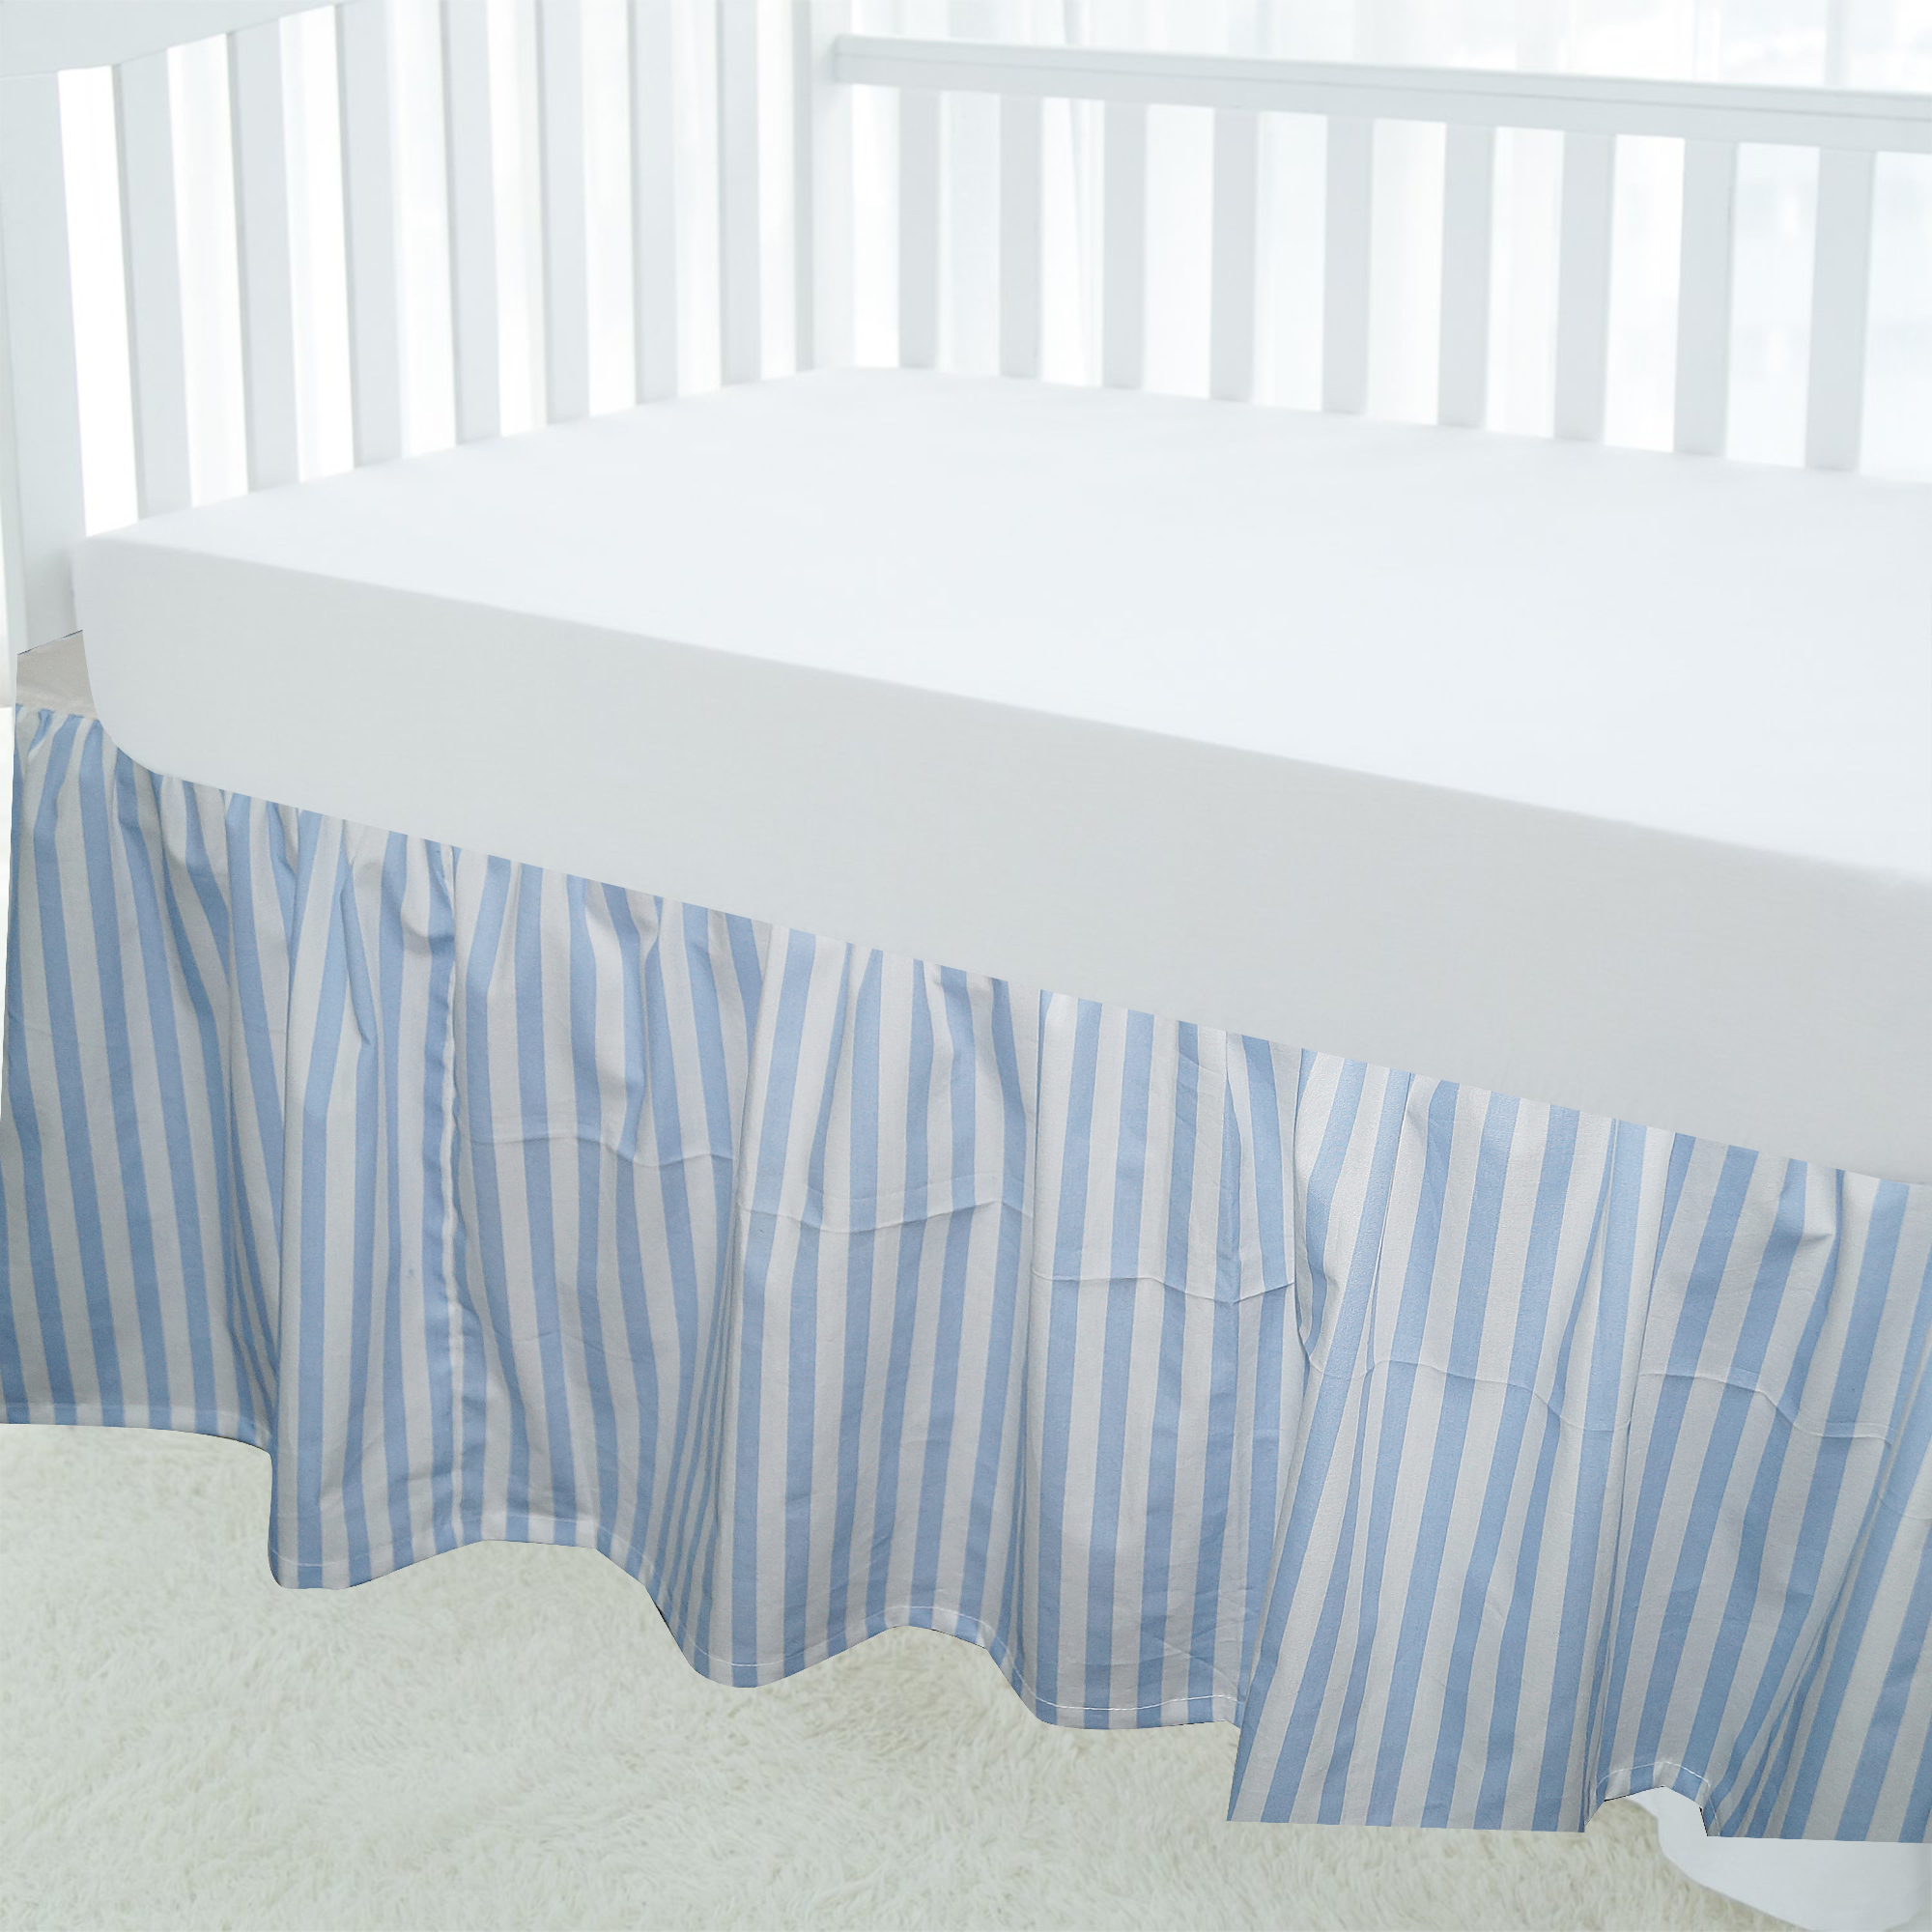 Striped Crib Skirt 100% Natural Cotton, Nursery Crib Bedding Skirt